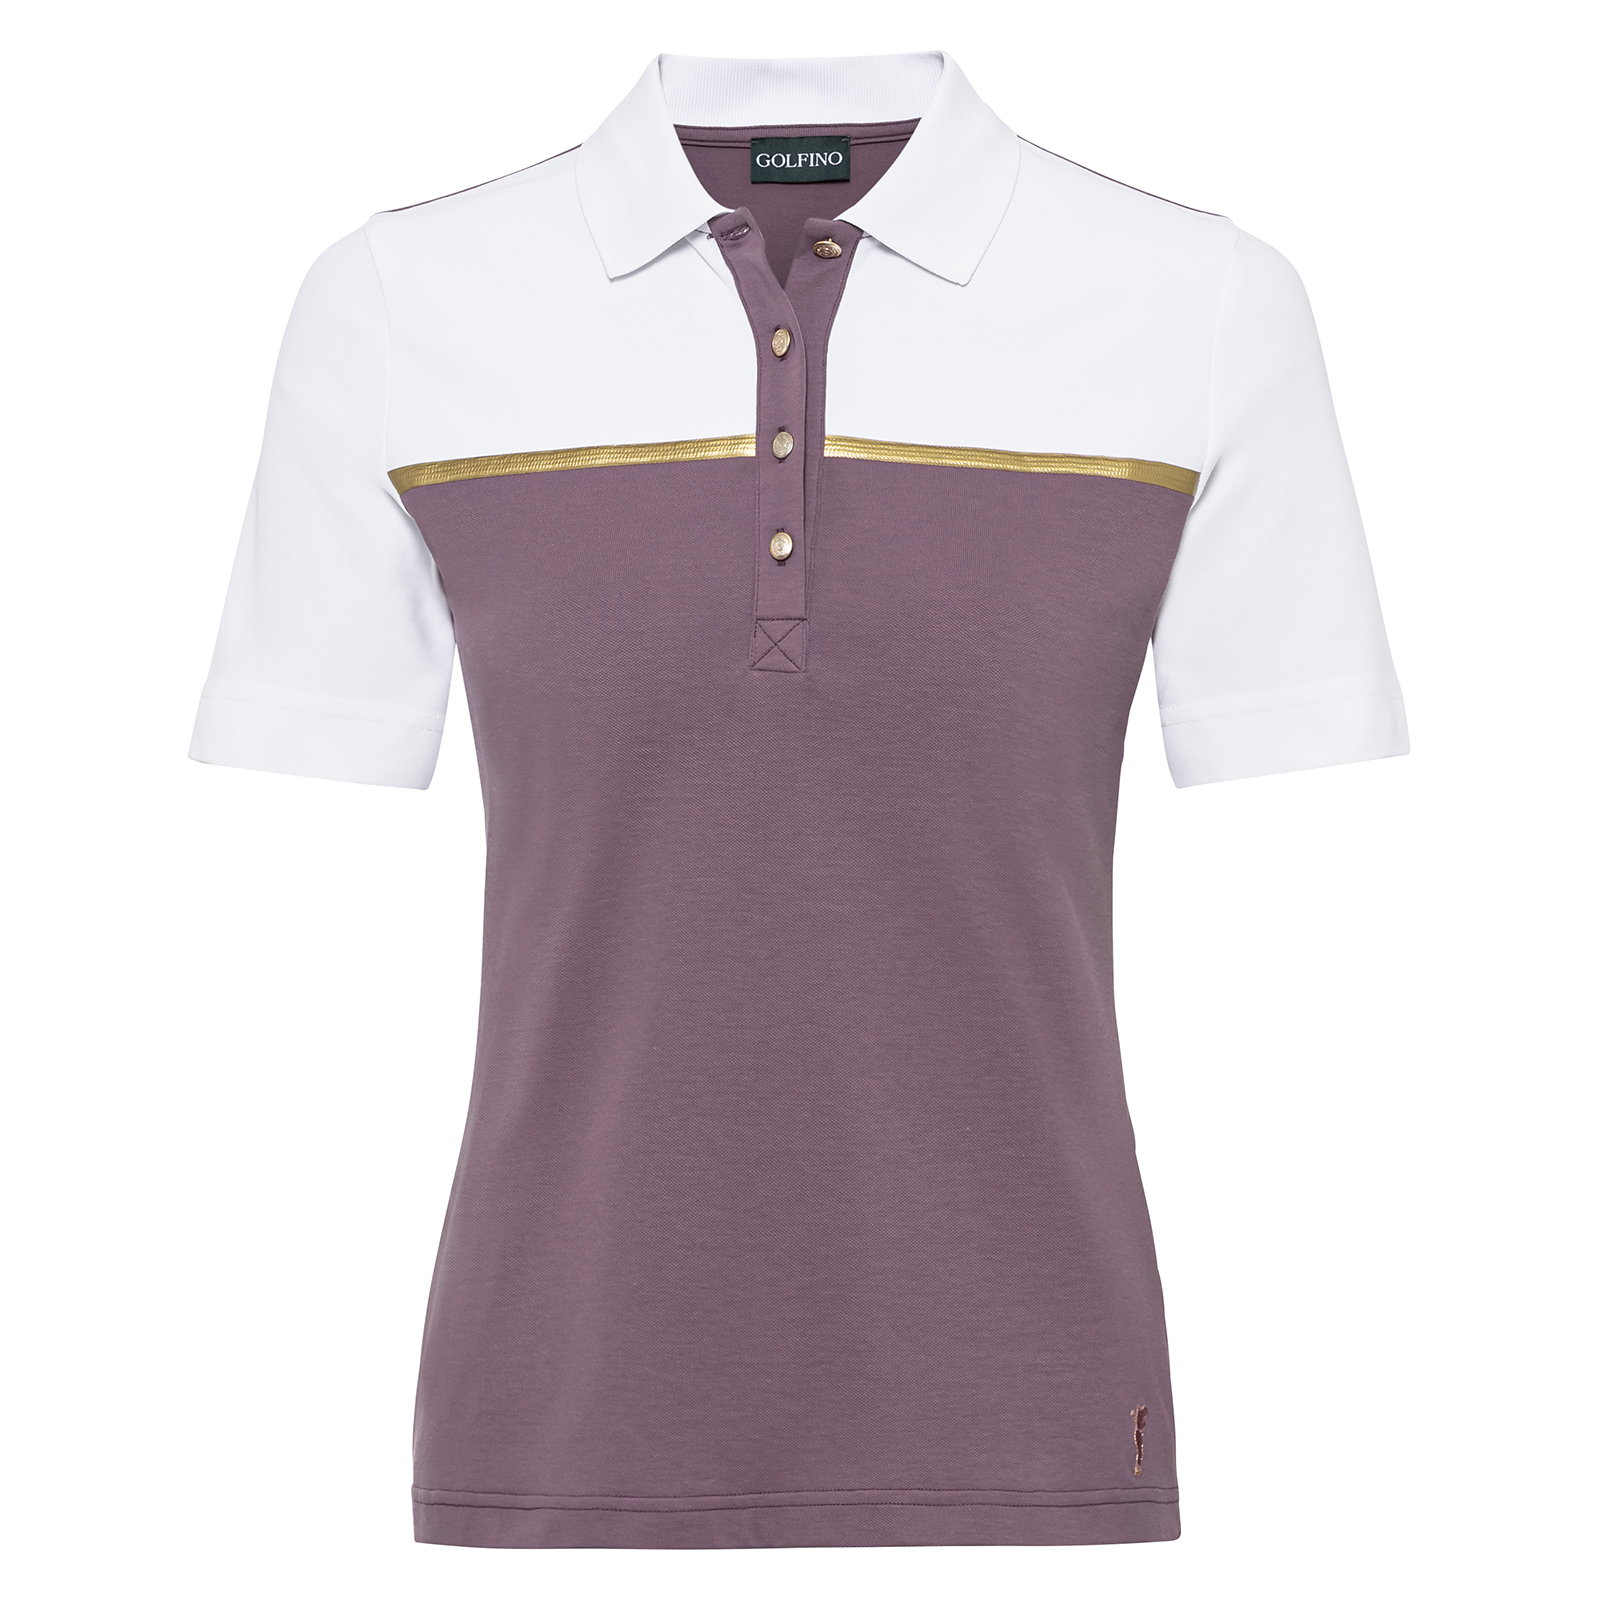 Ladies’ moisture-regulating golf polo shirt with elegant details